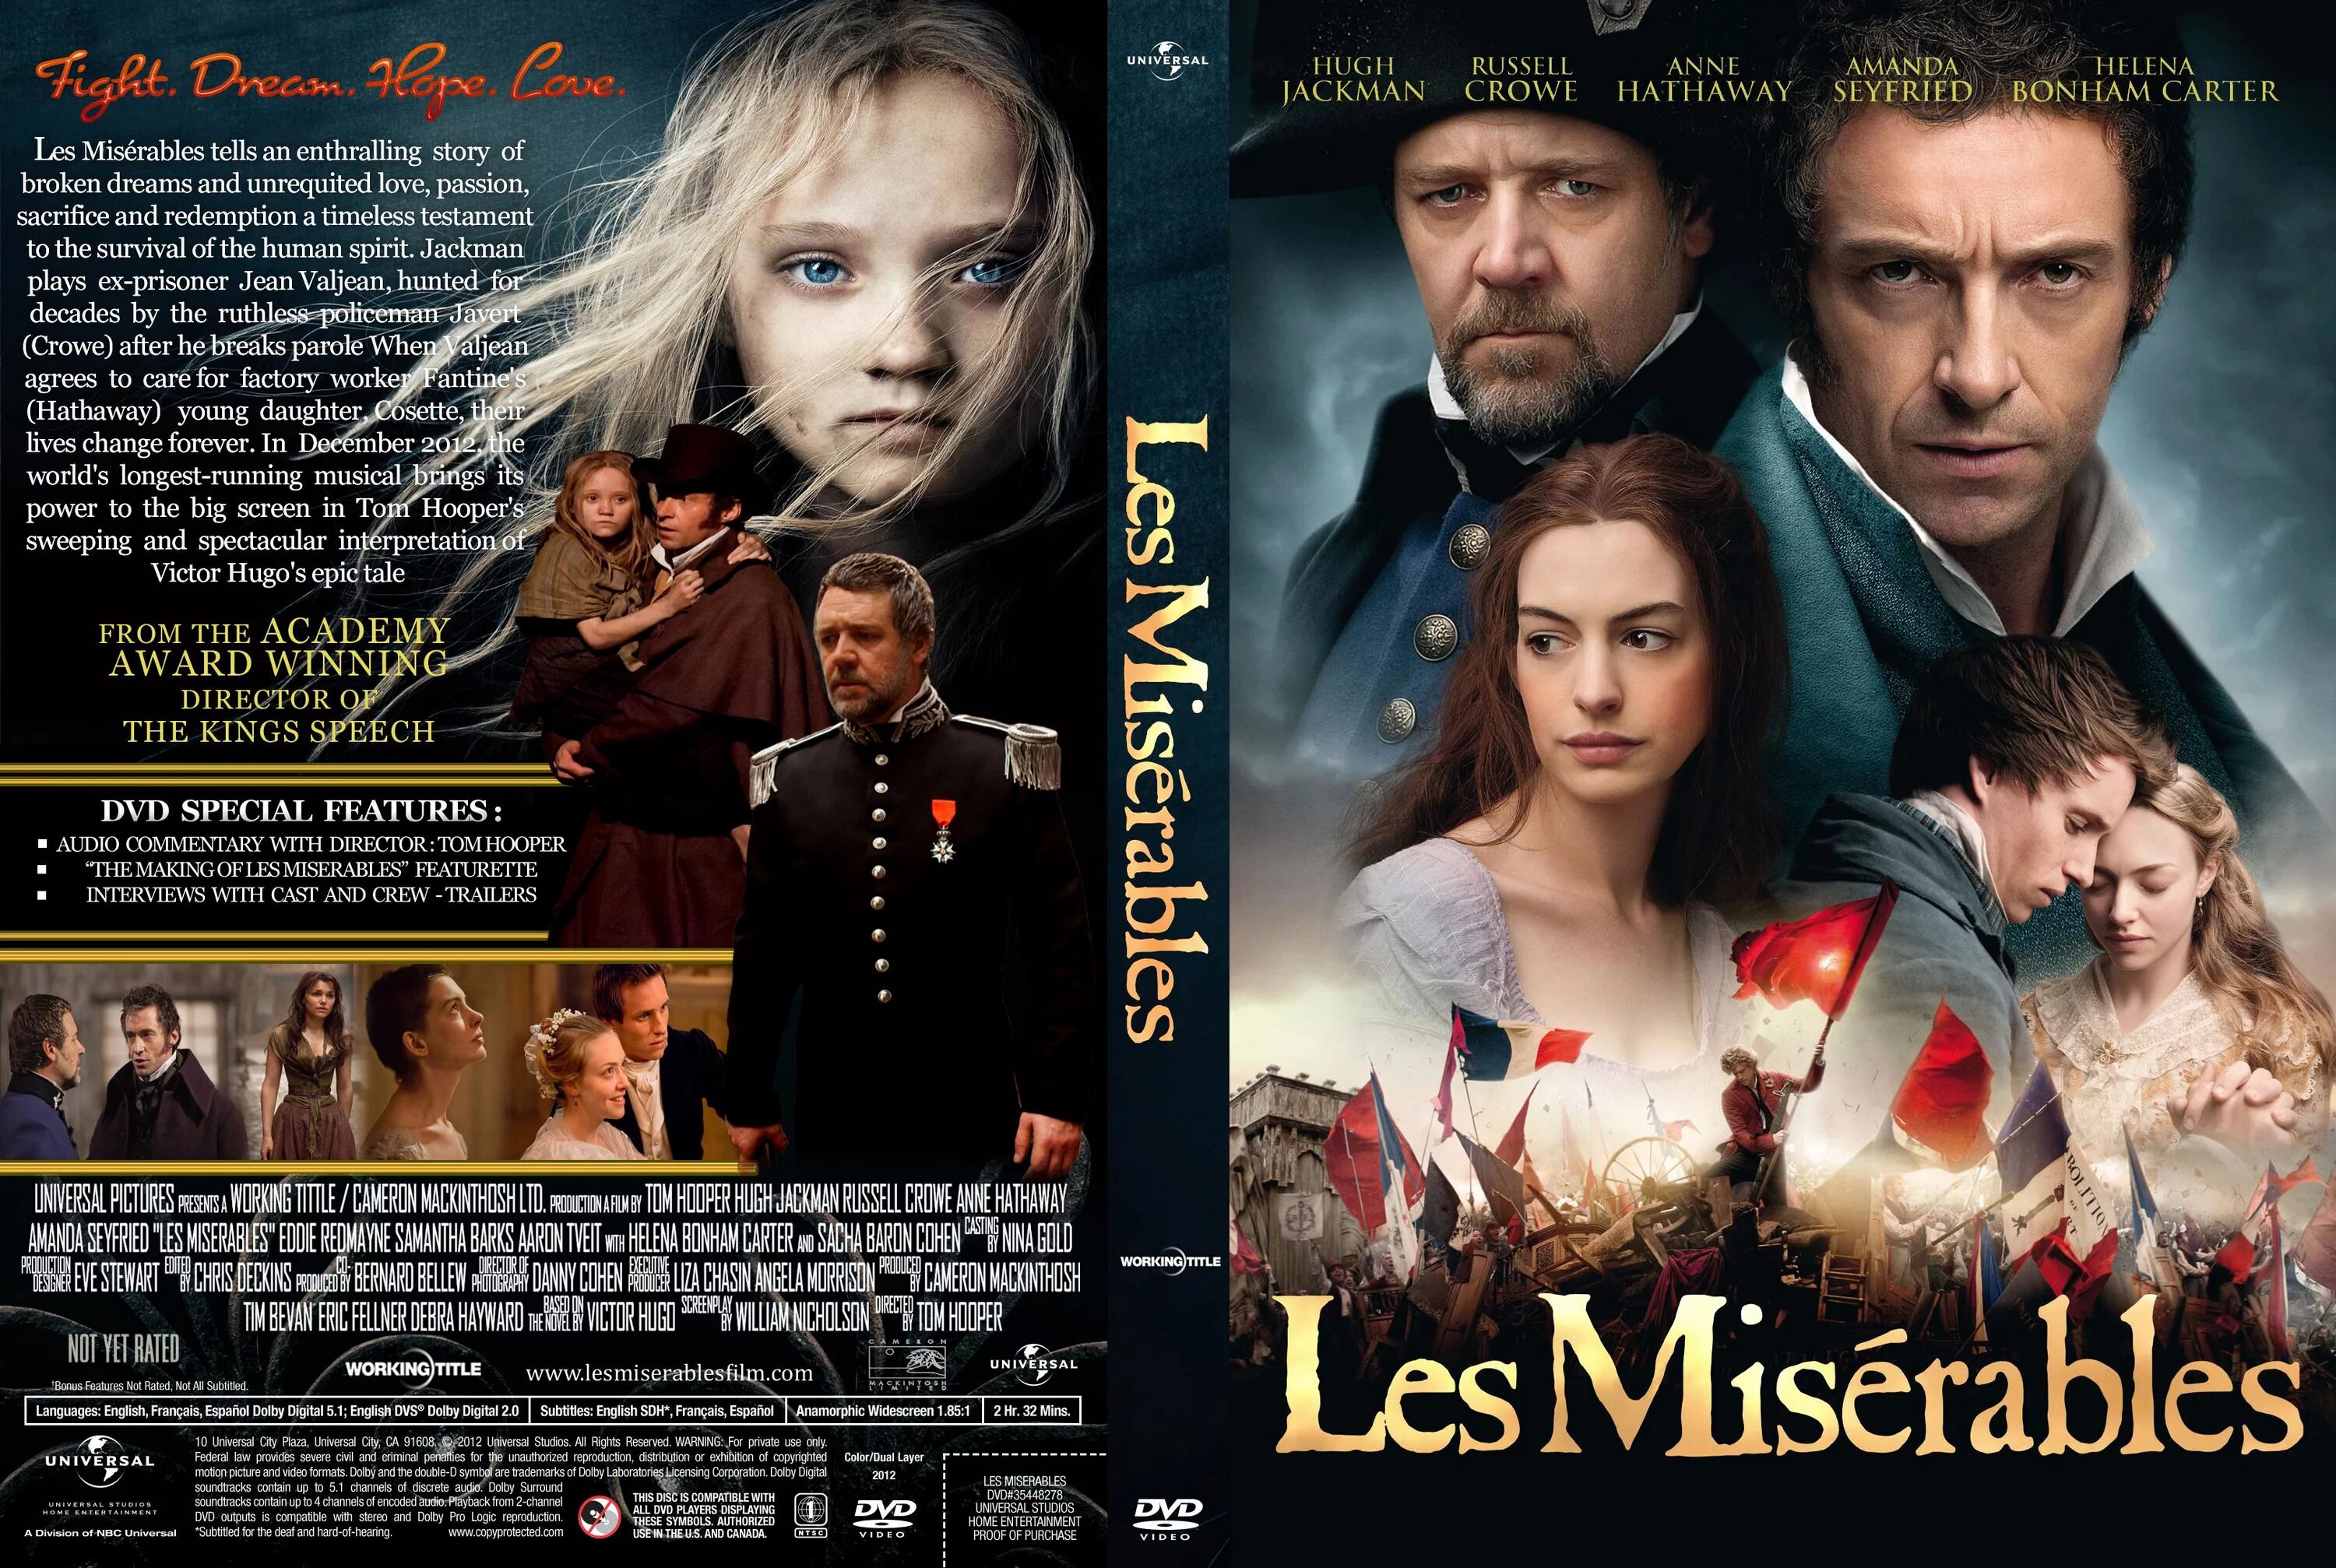 Les Miserables 2012 постеры. Отверженные / les Miserables (les Misérables) / 1935. 2012 обложка